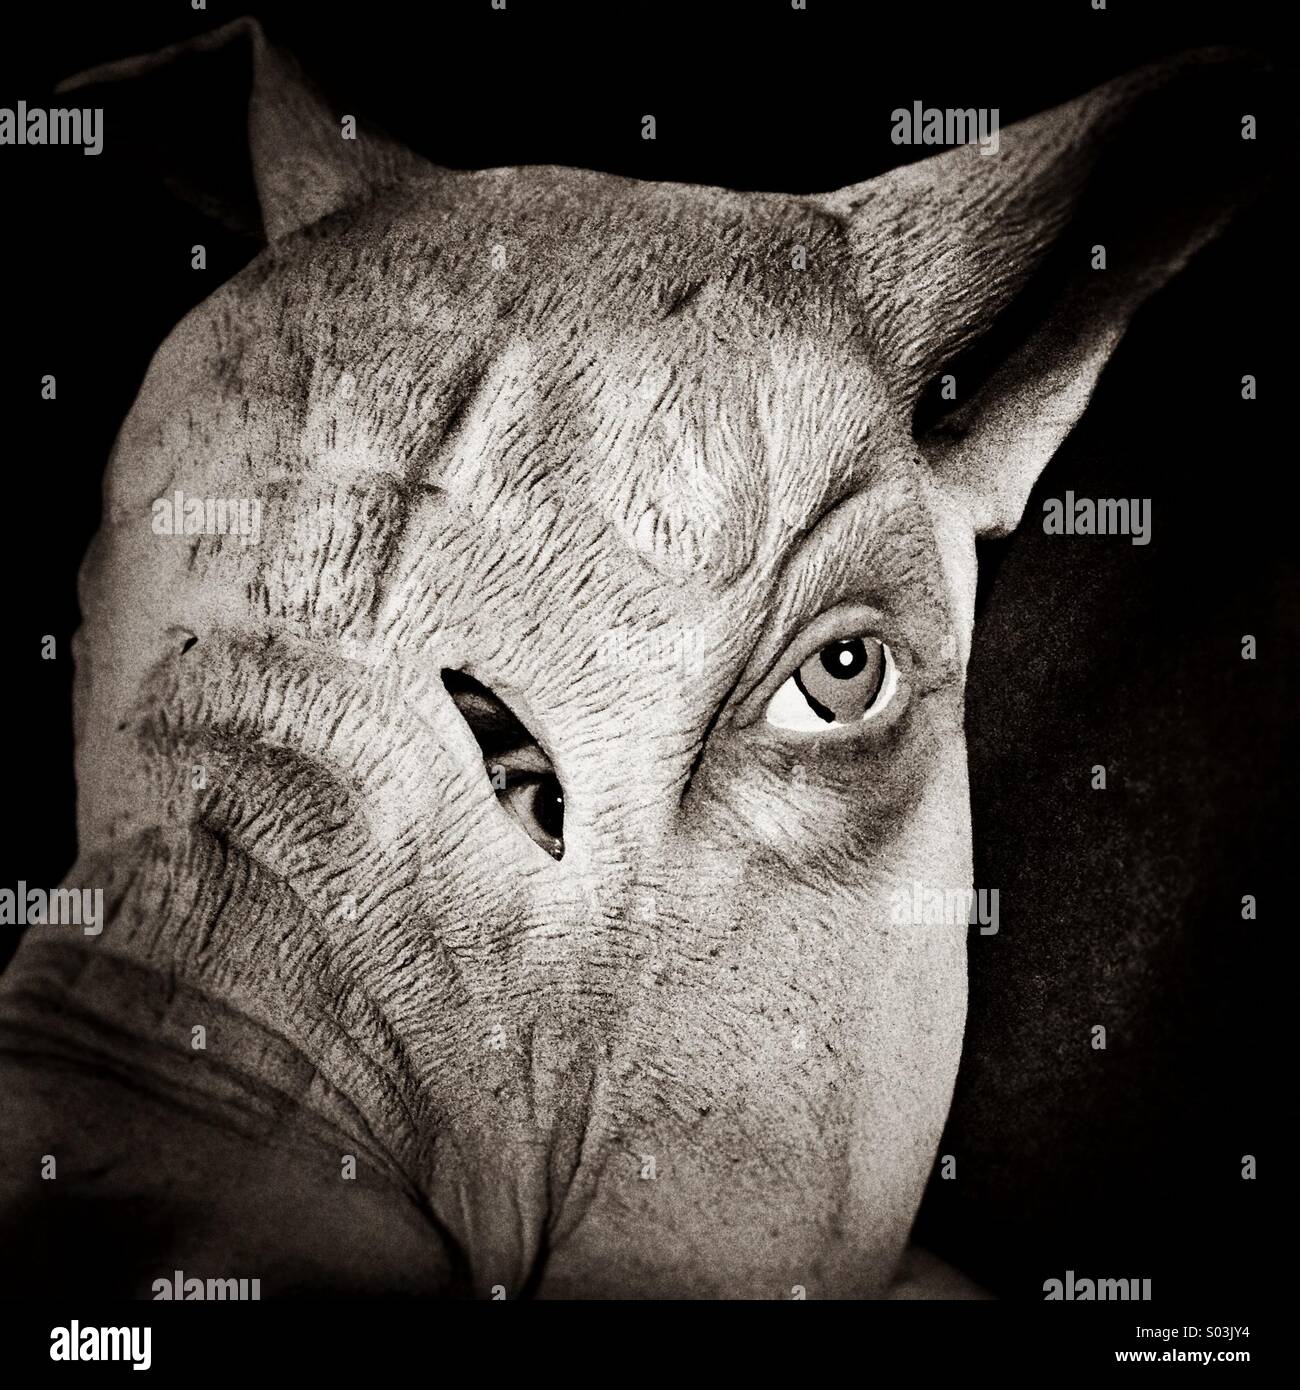 Peeping through the pig mask Stock Photo